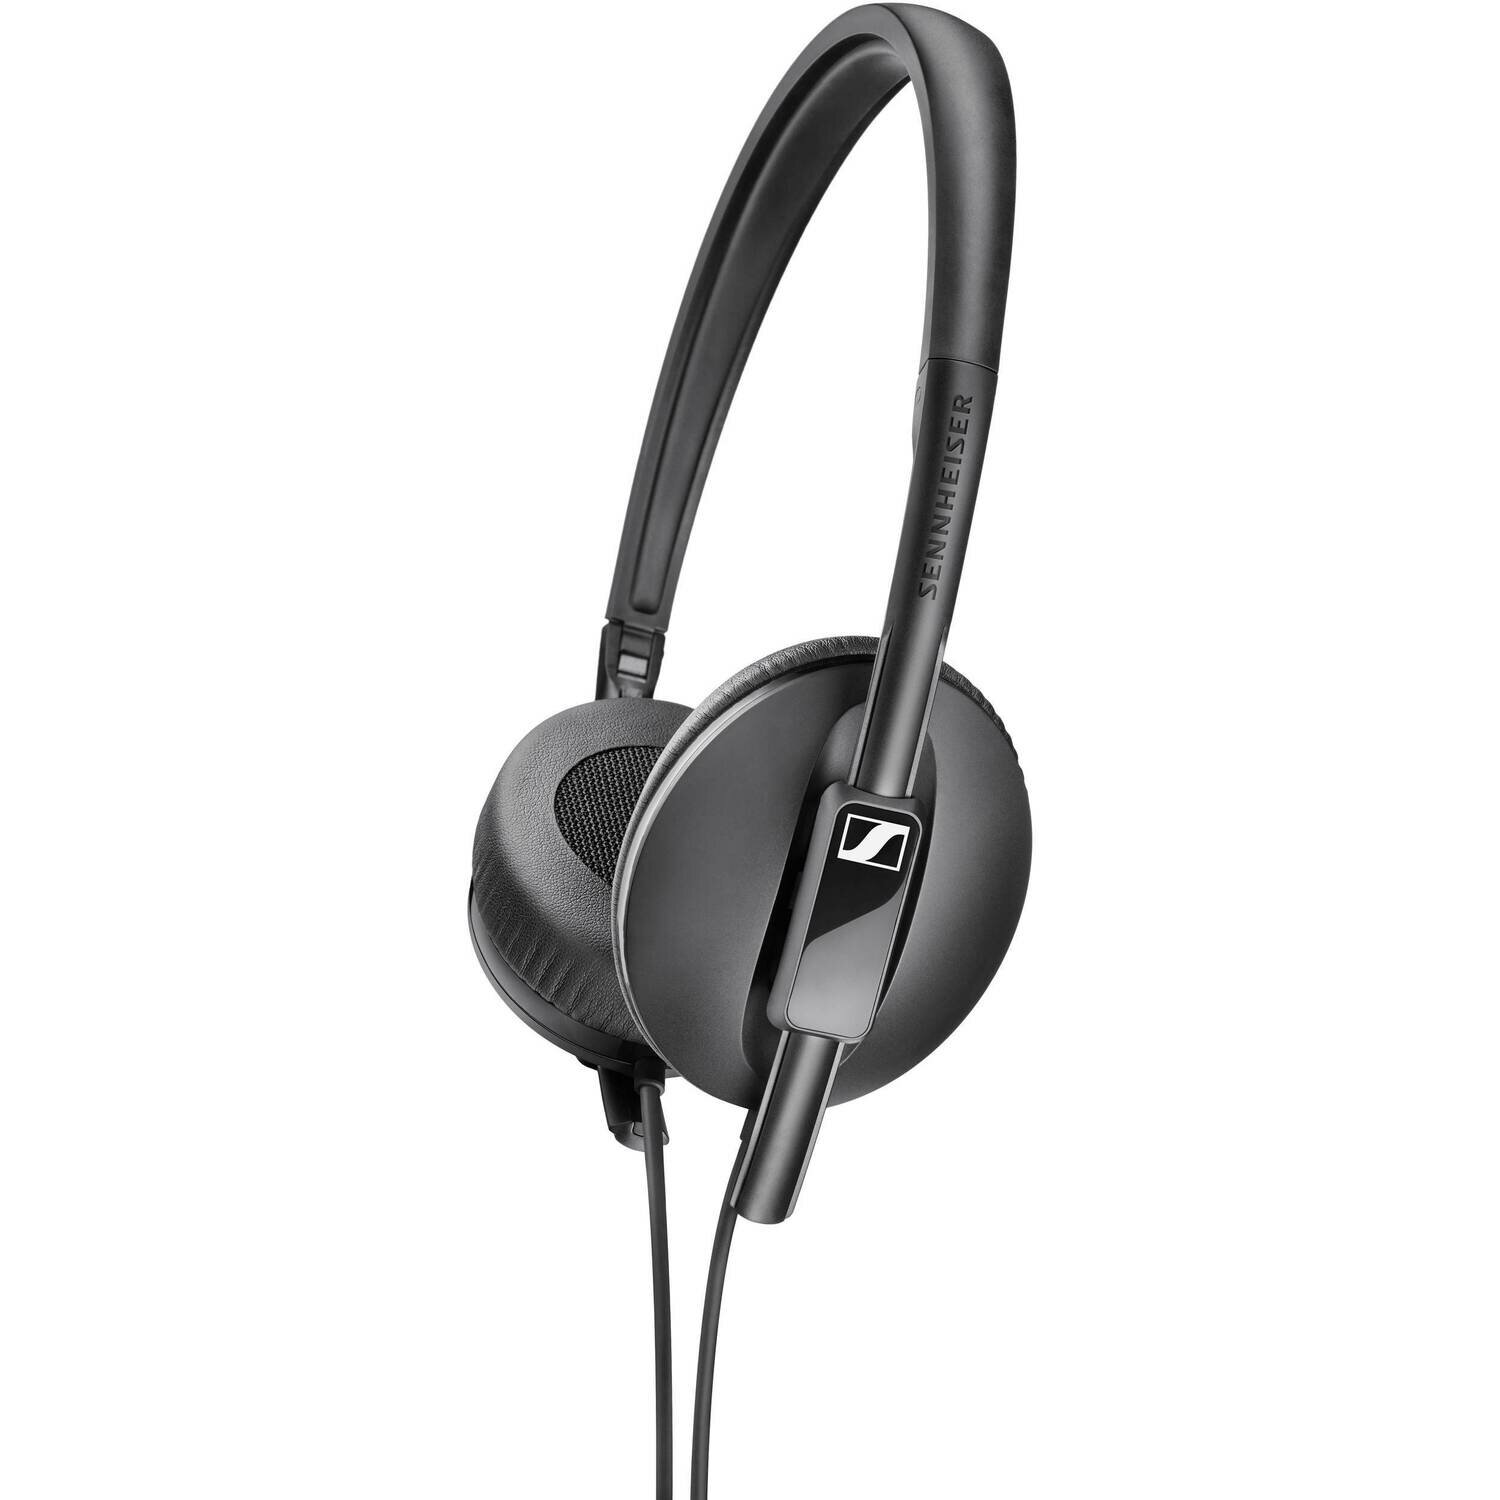 Sennheiser HD 100 On-Ear Headphones
#SEHD100 MFR #508596